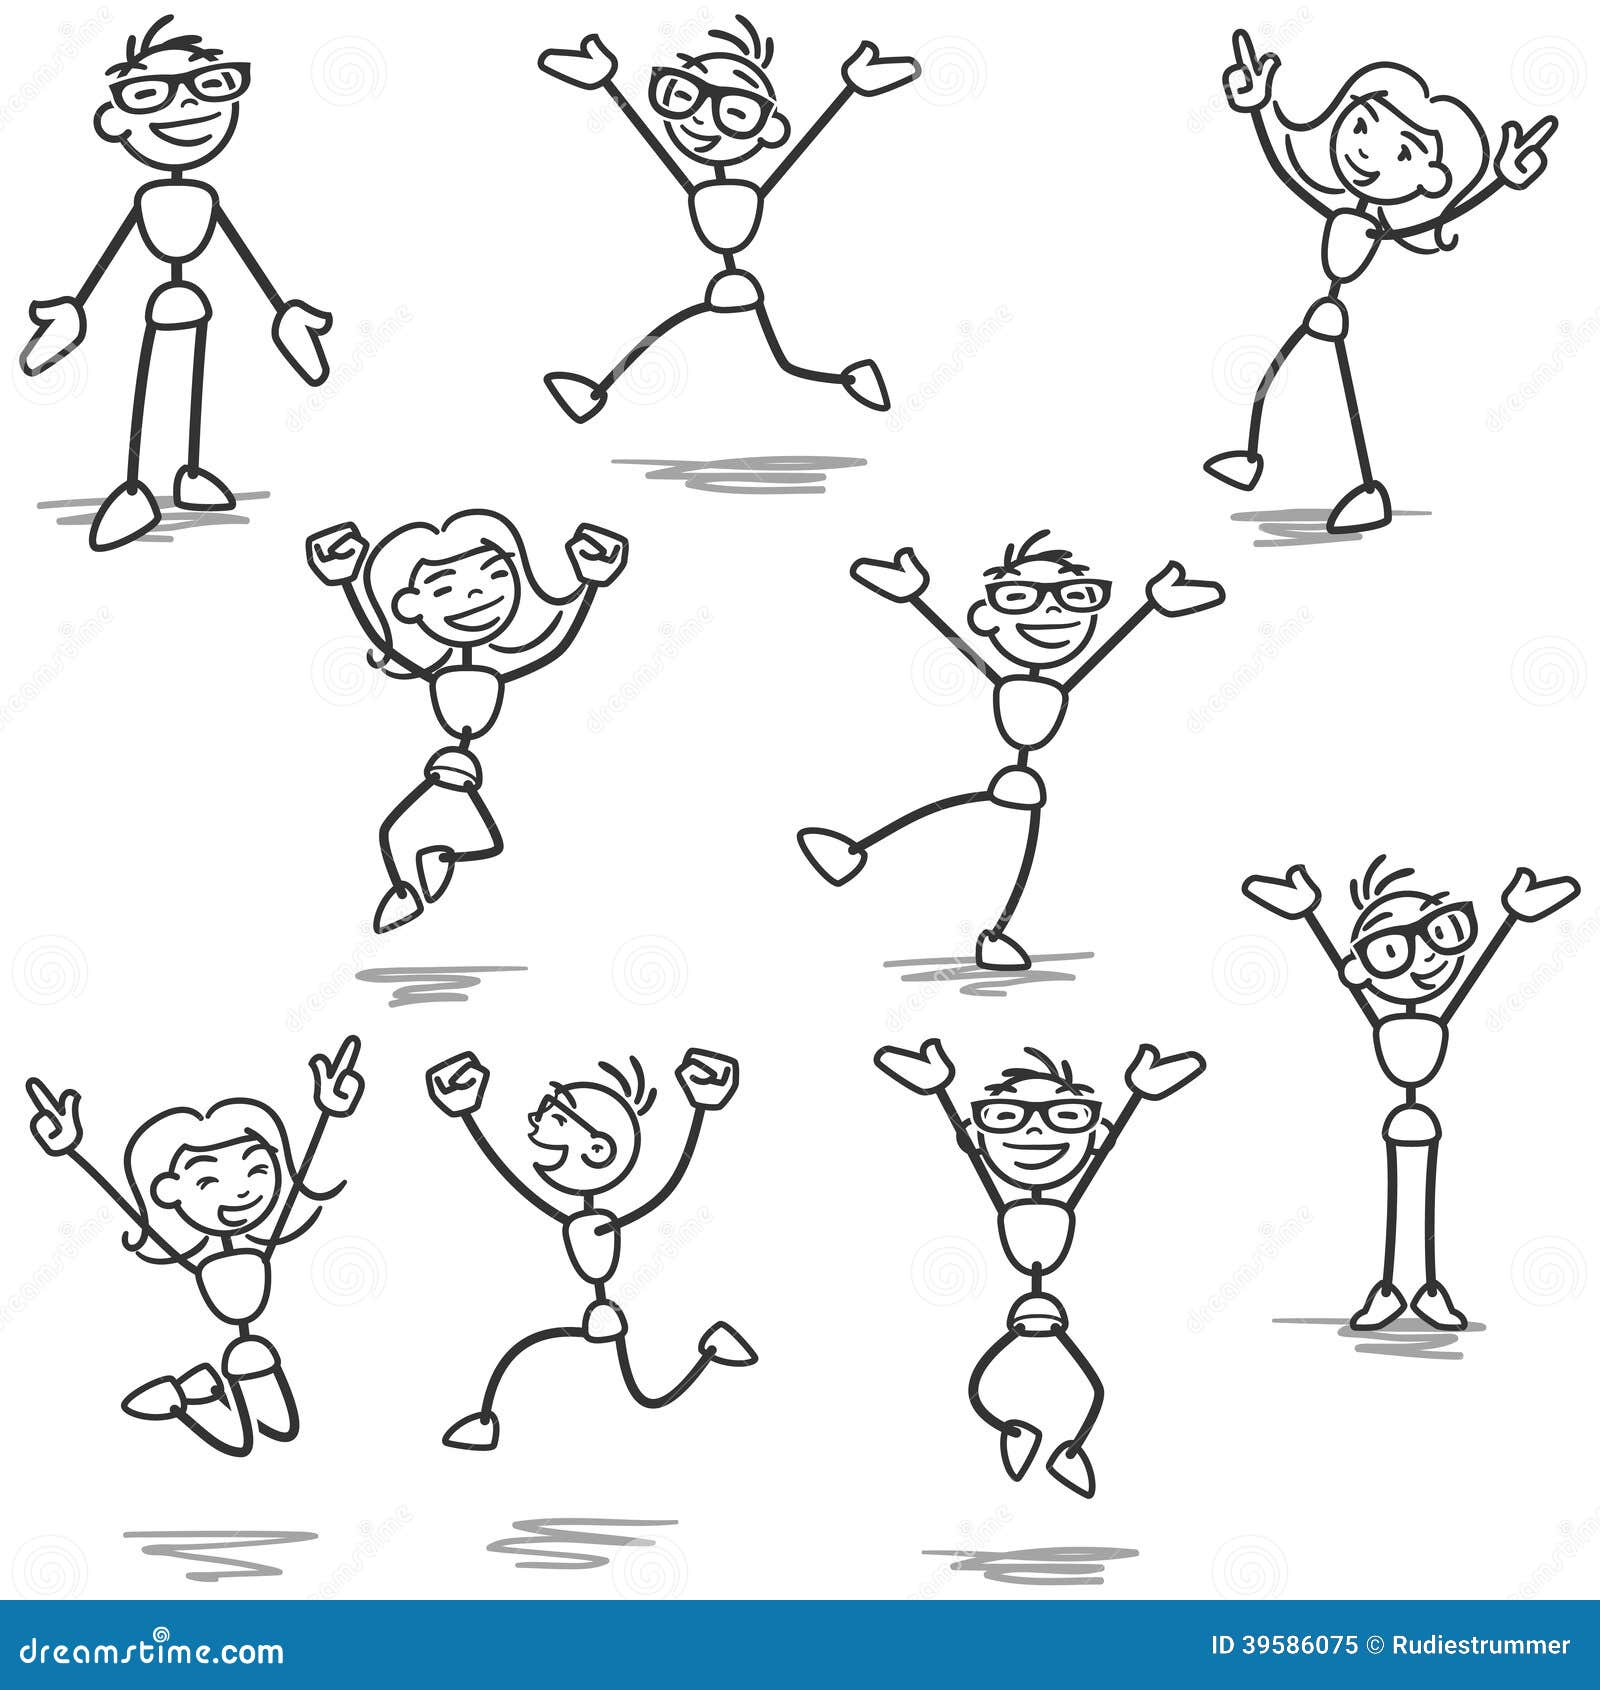 Exercise, Stick Figure, Animation, Drawing, Dance, Aerobics